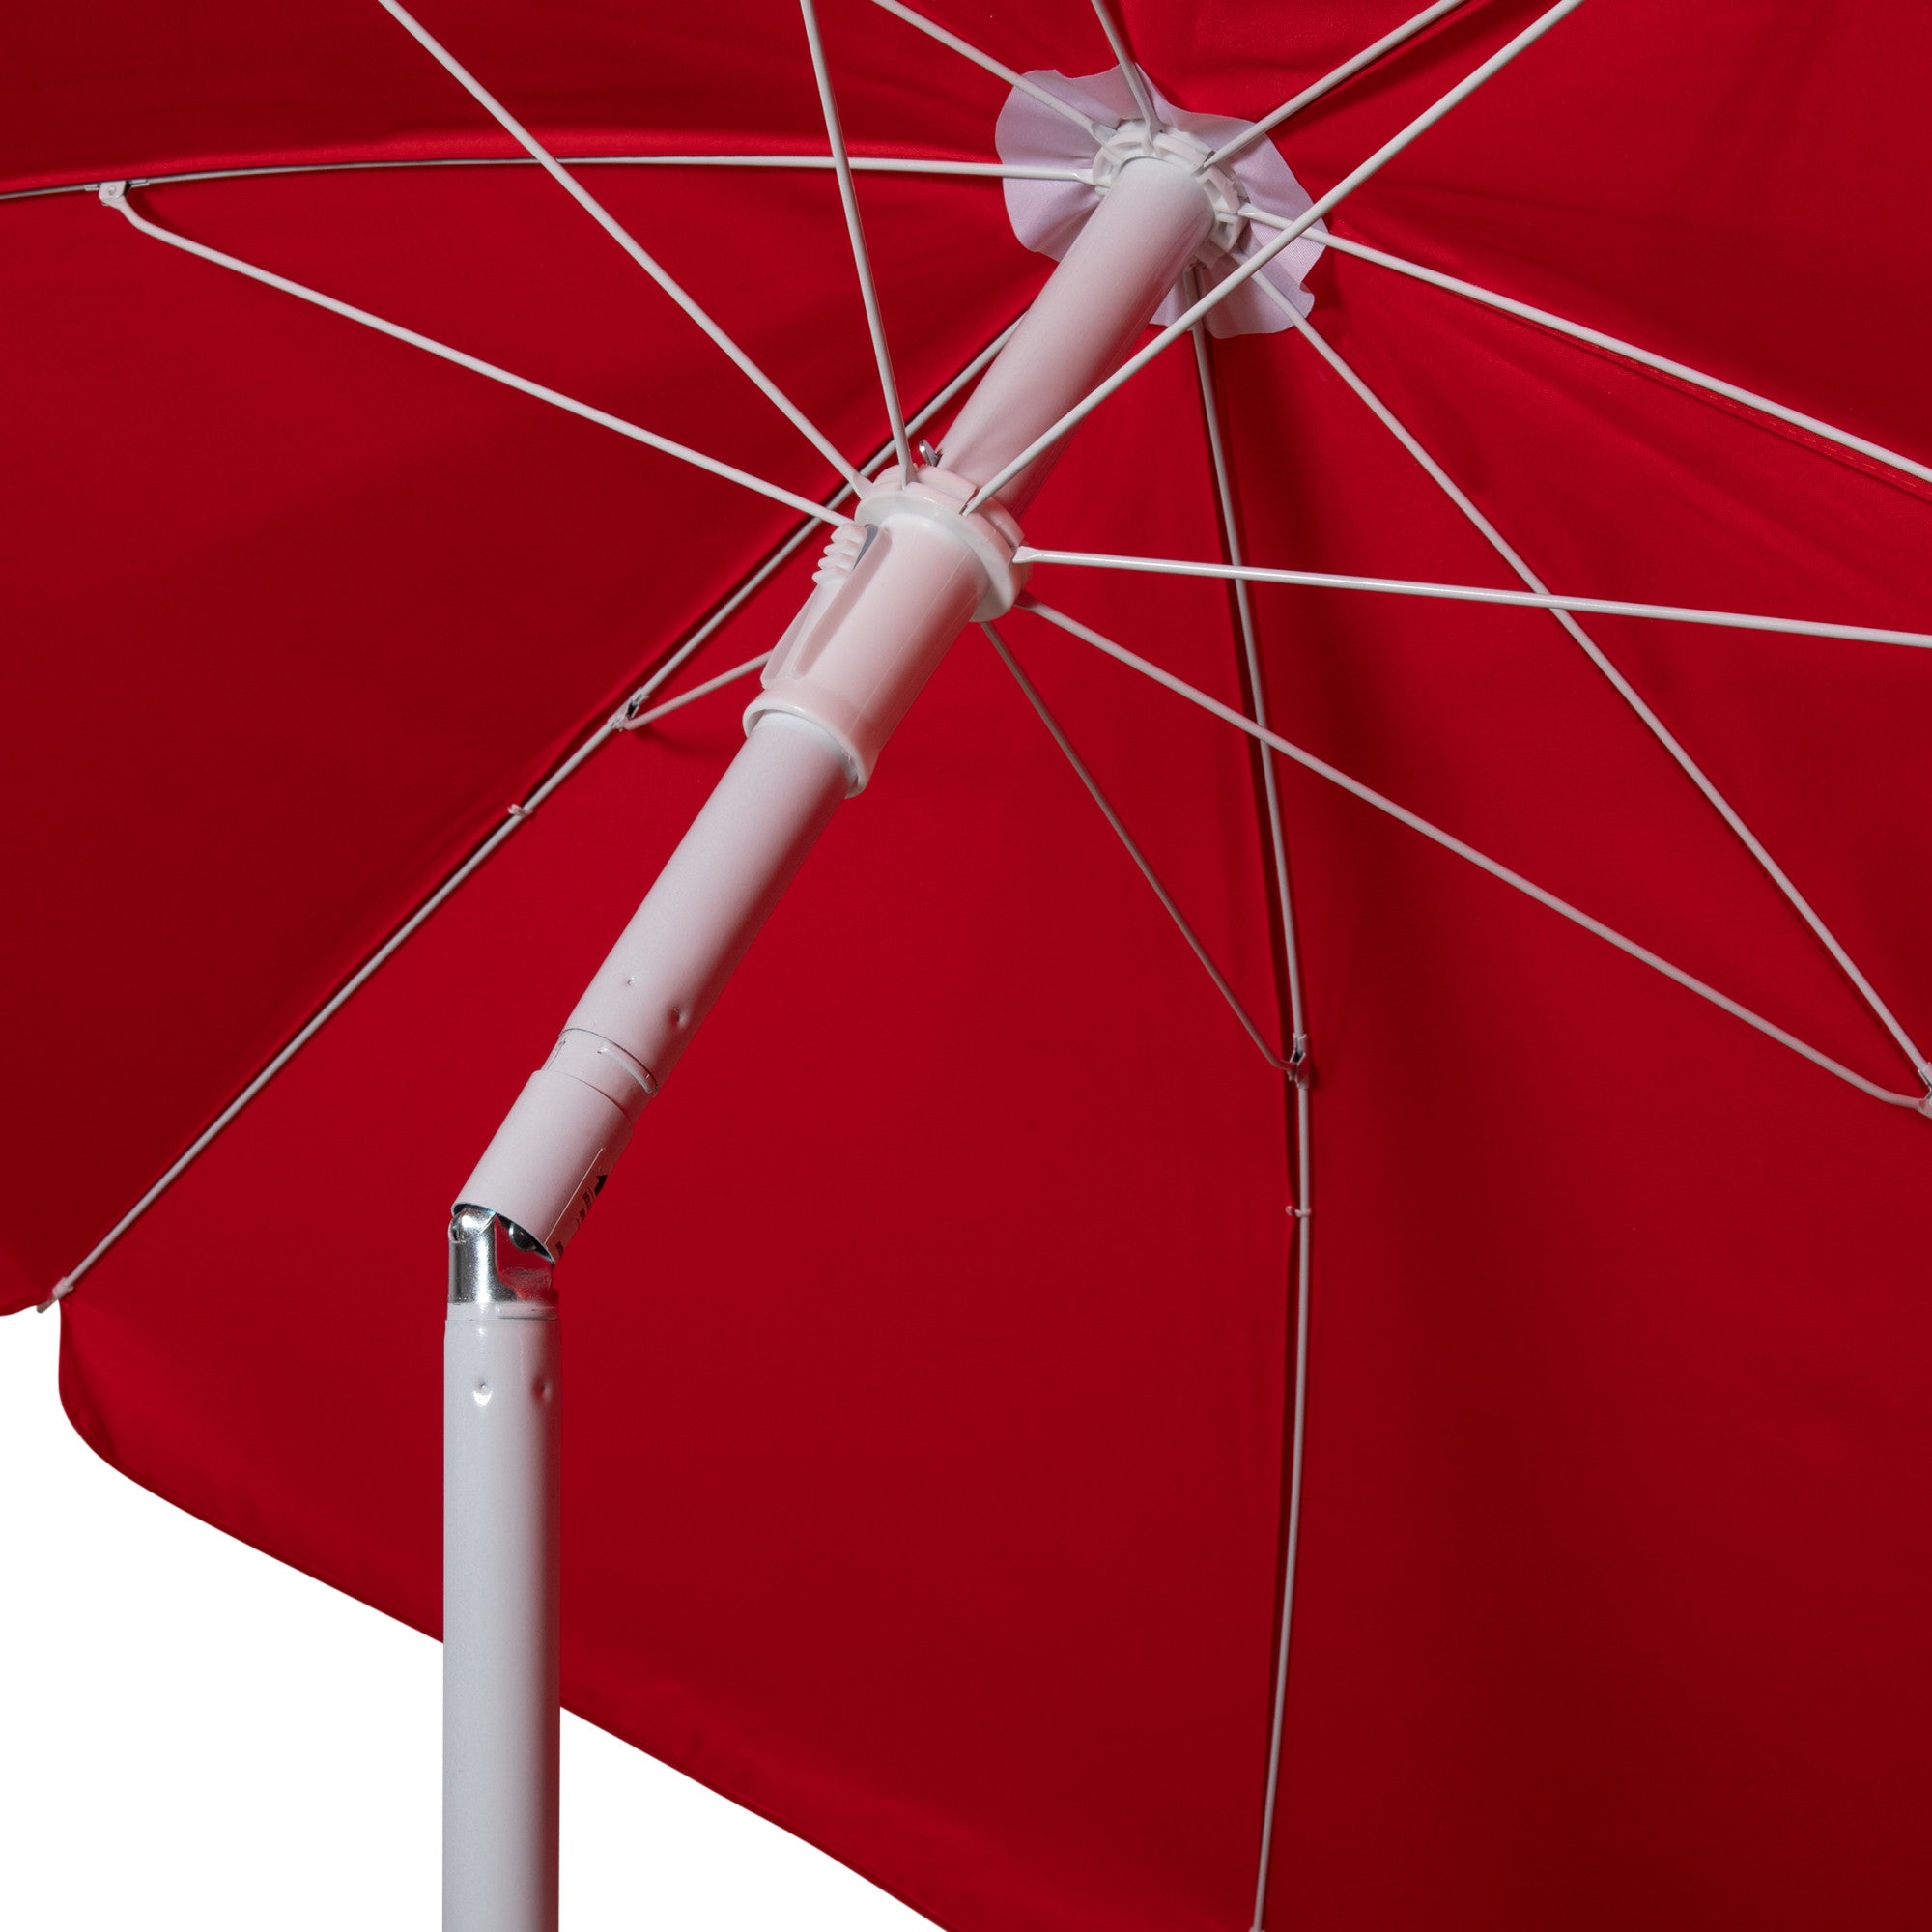 Stanford Cardinal - 5.5 Ft. Portable Beach Umbrella